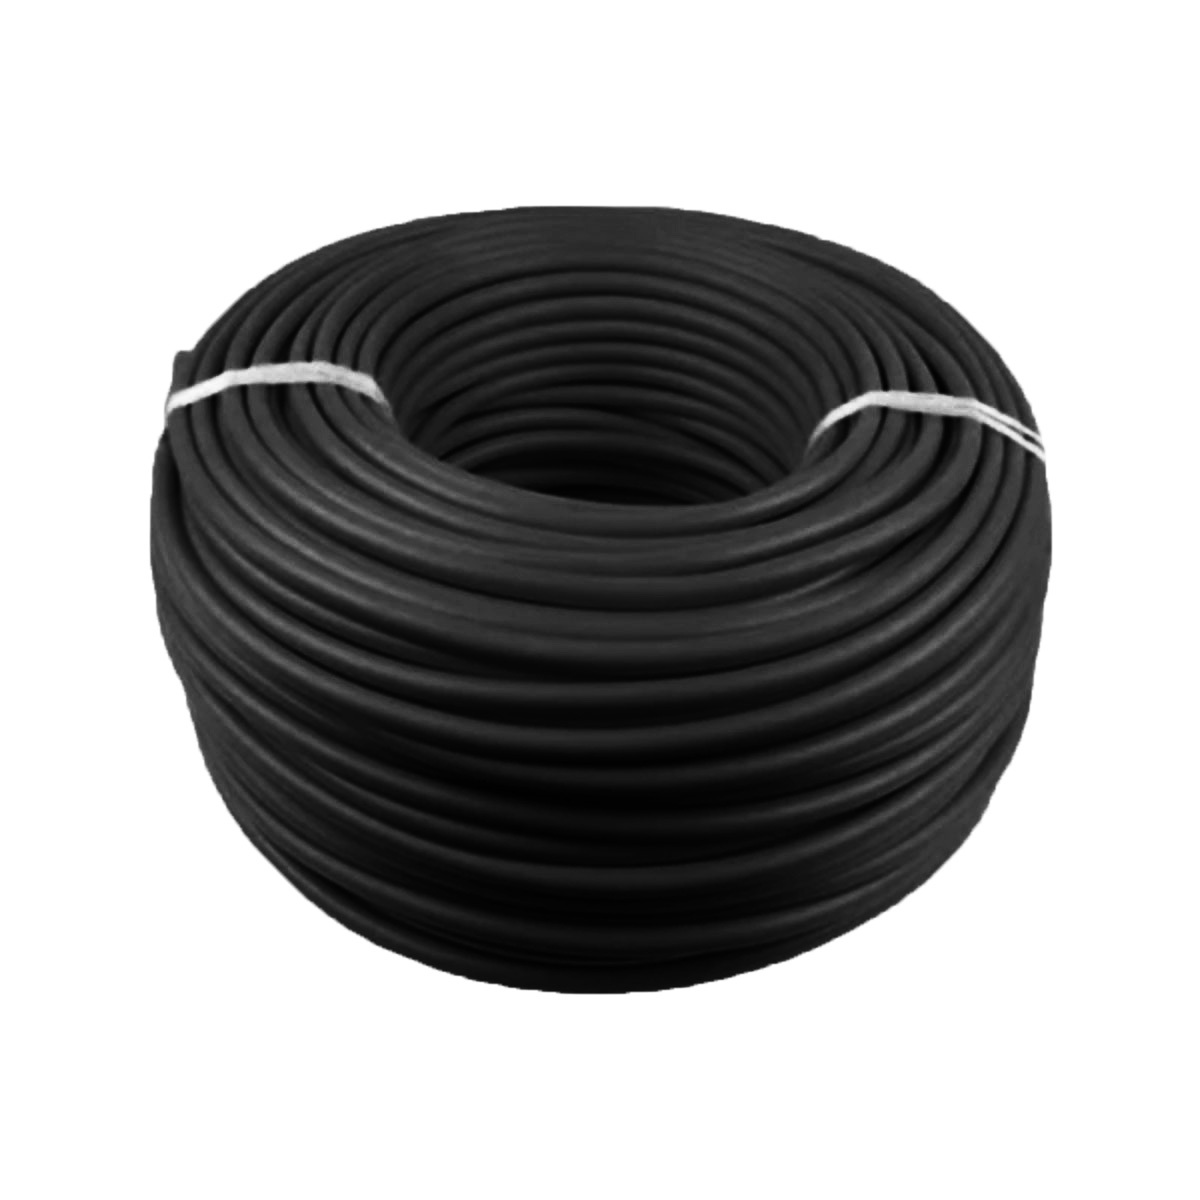 1.5 sq mm BV Series 3-core Tinned LSZH Power Cable - black sheath